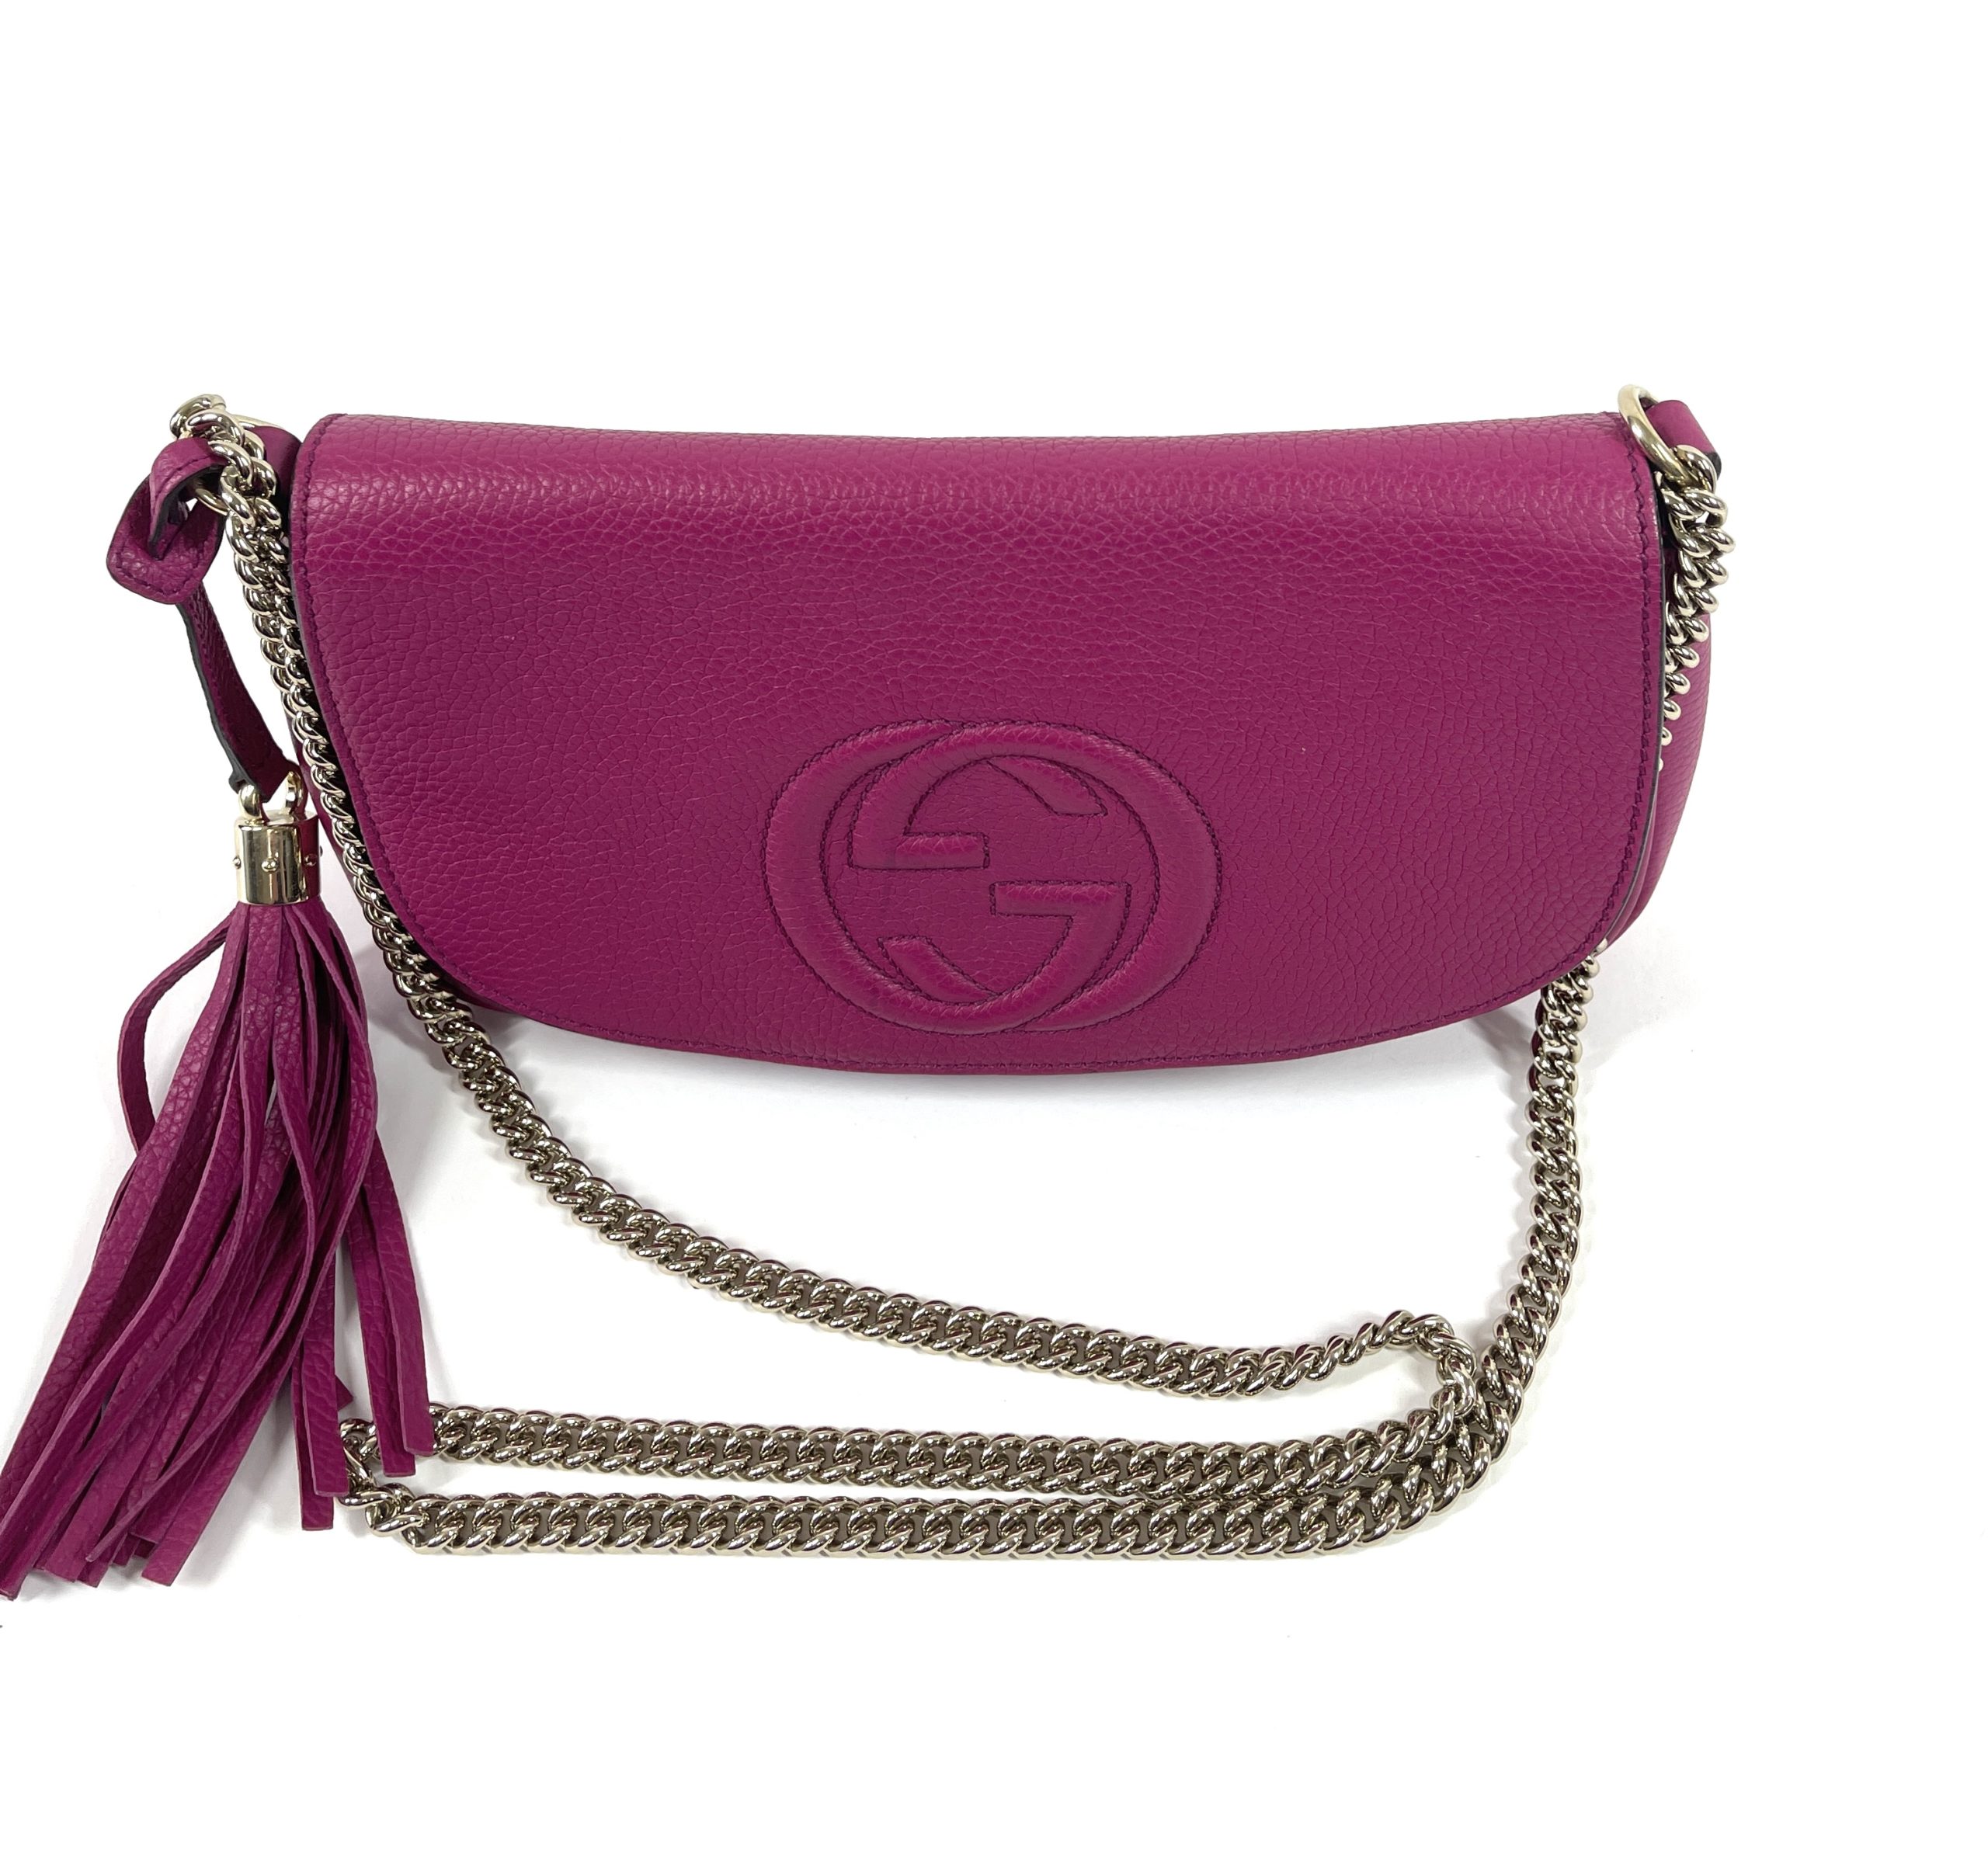 Gucci Medium Interlocking GG Crossbody Bag in Soft Pink